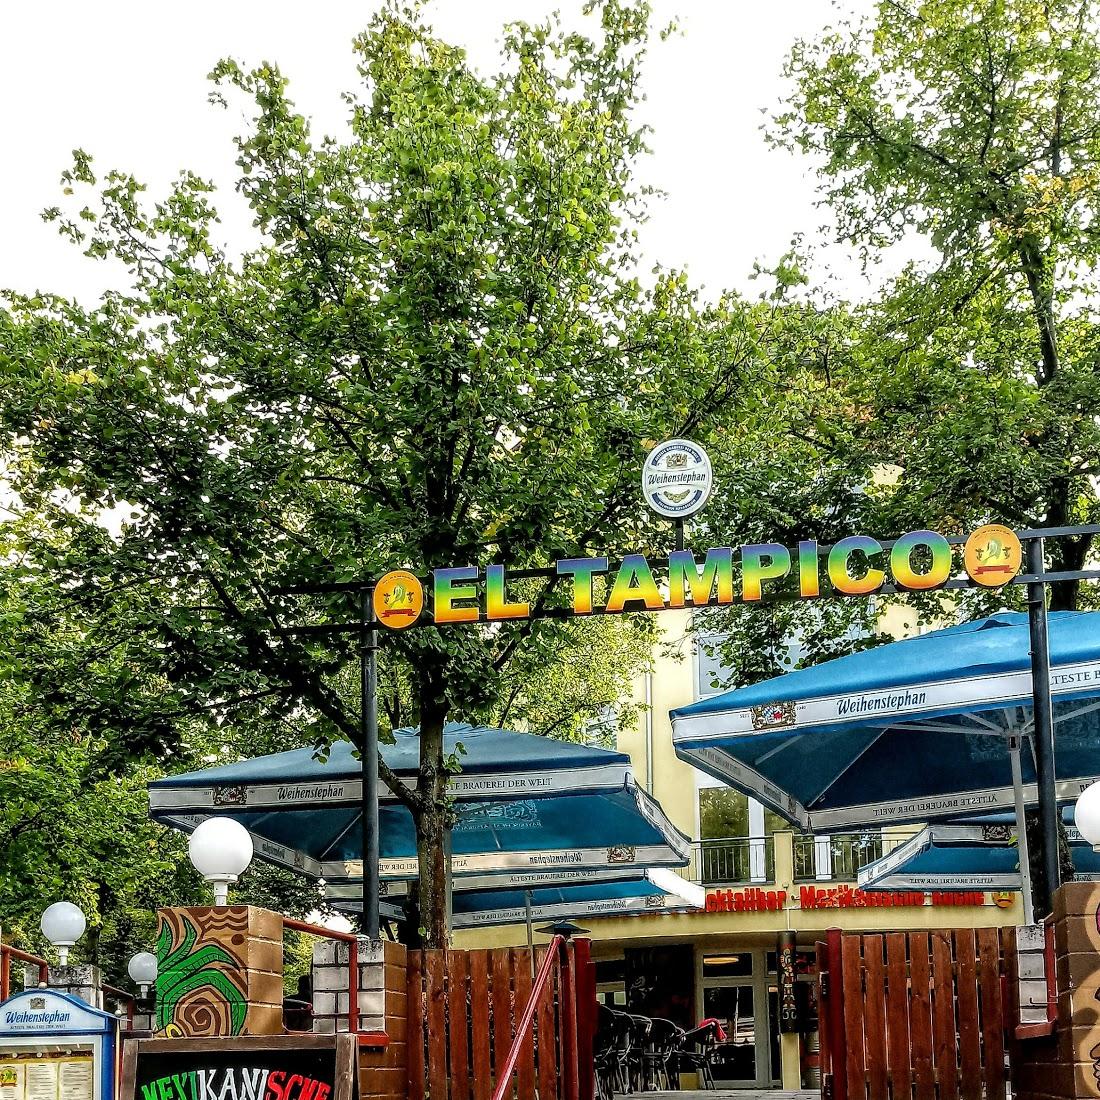 Restaurant "El Tampico" in Kleinmachnow